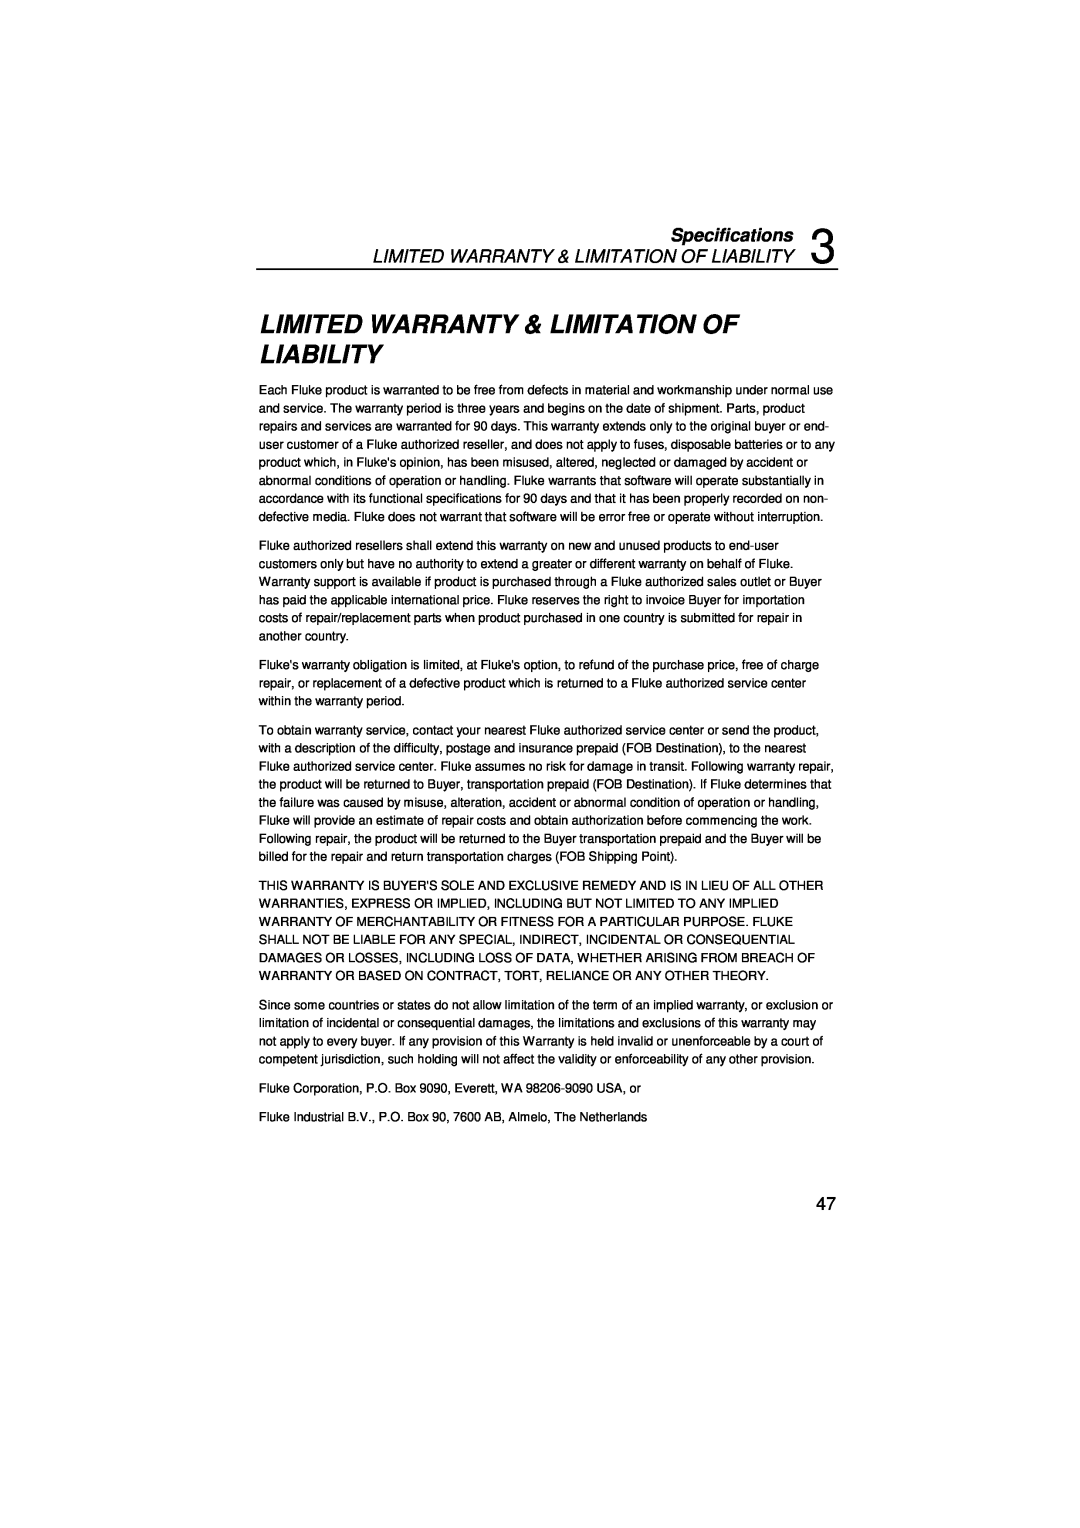 Fluke 43B user manual Limited Warranty & Limitation Of Liability, Specifications 